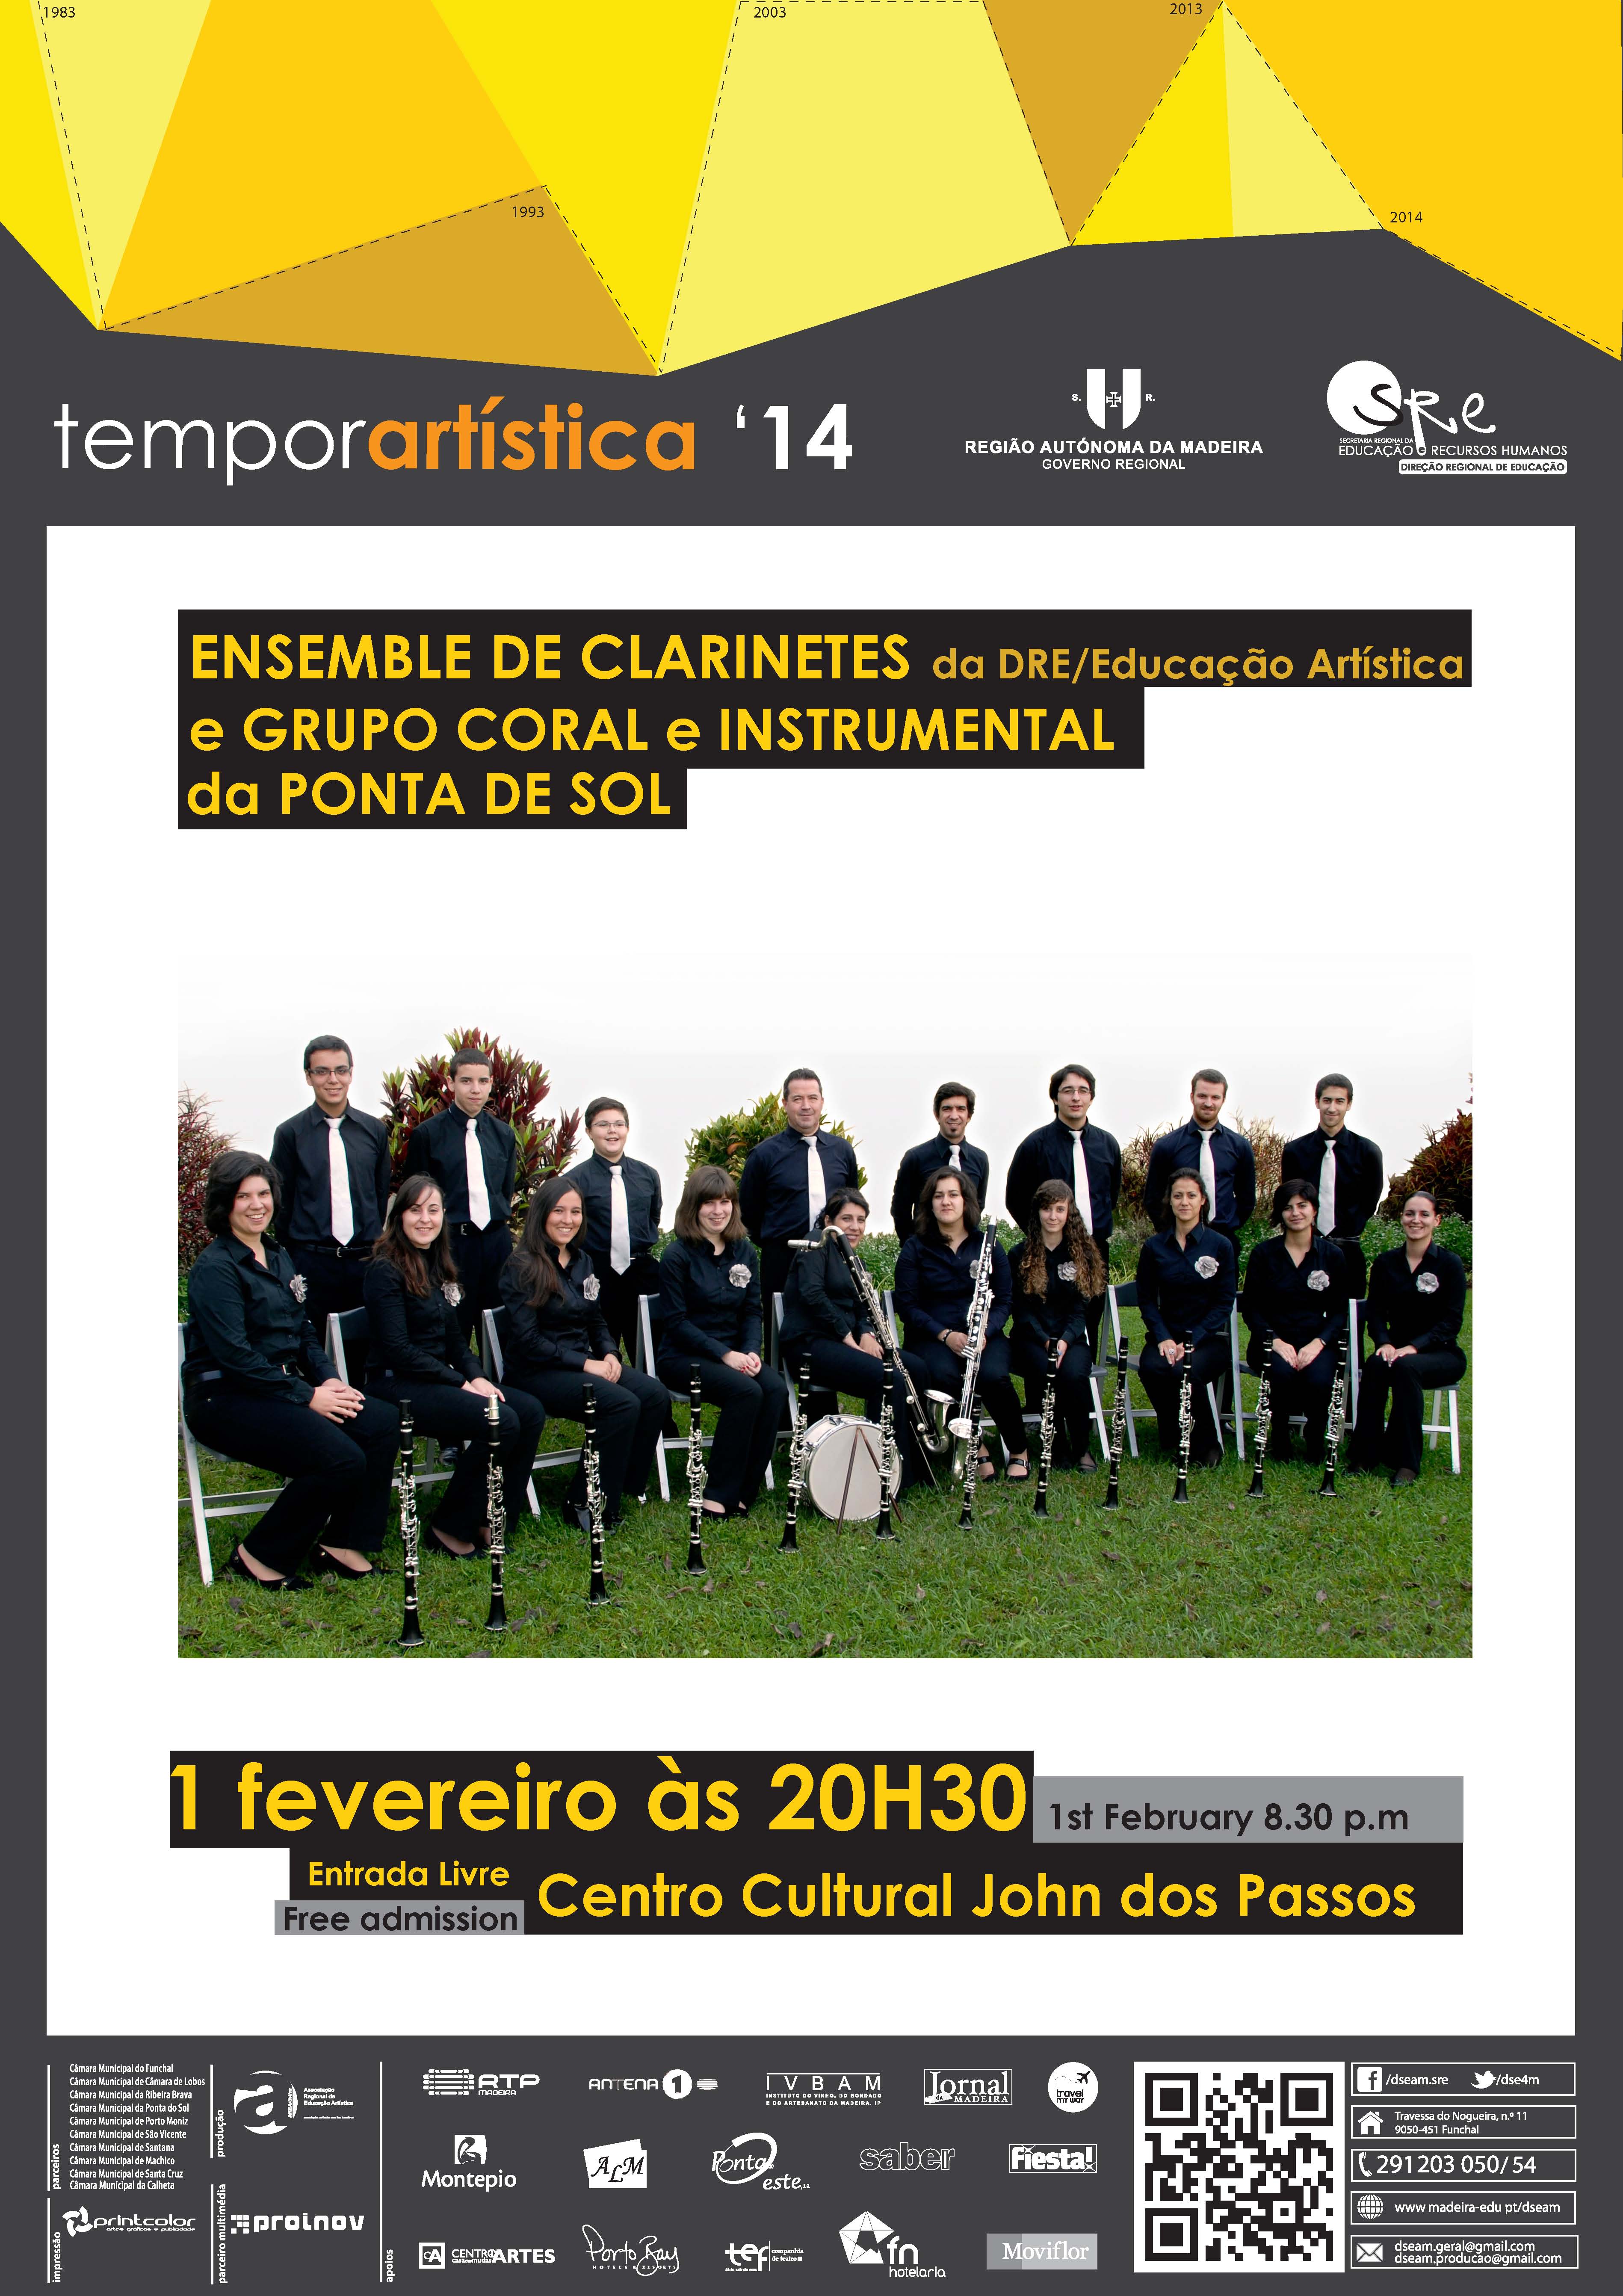 Concerto com o Ensemble de Clarinetes